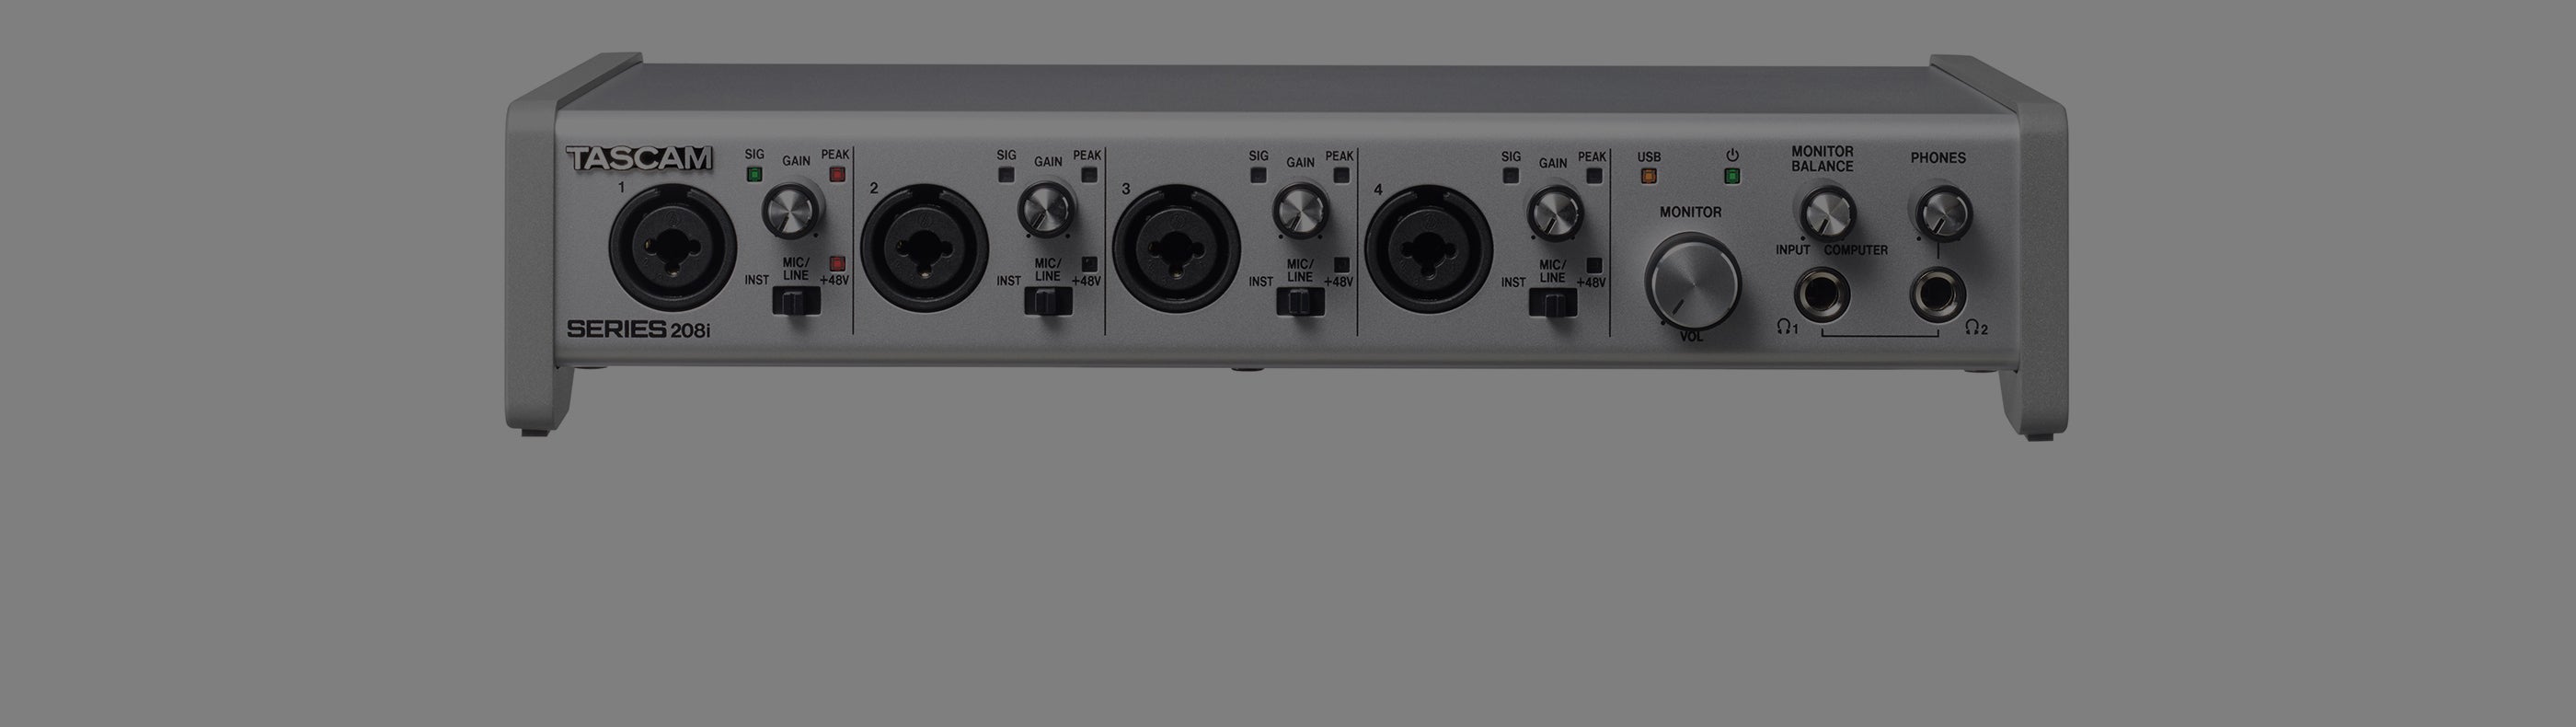 TASCAM Series 208i USB Audio/MIDI Interface – Kraft Music